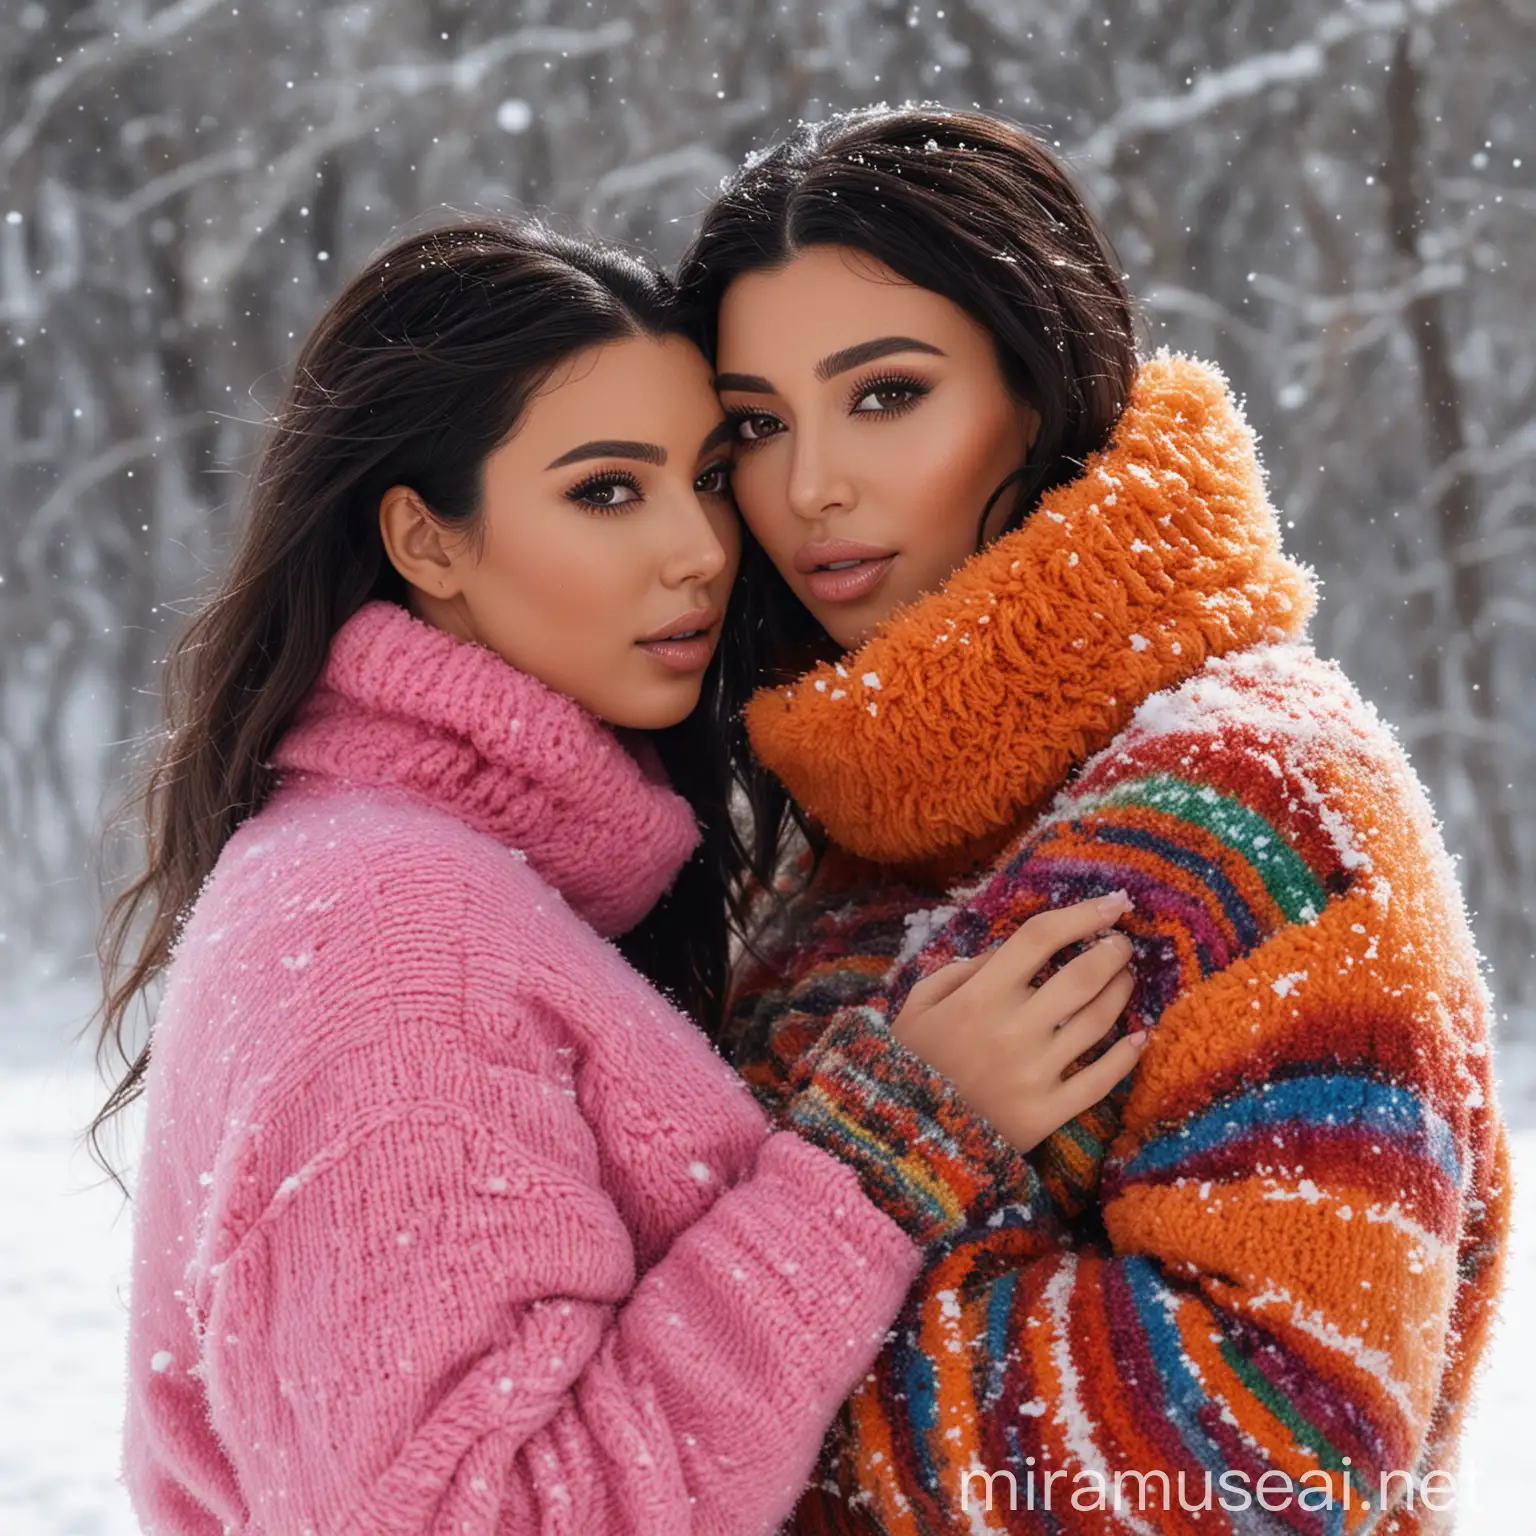 Celebrity Kim Kardashian and Friend Snuggle in Colorful Fuzzy Turtleneck Sweaters in Snowy Embrace